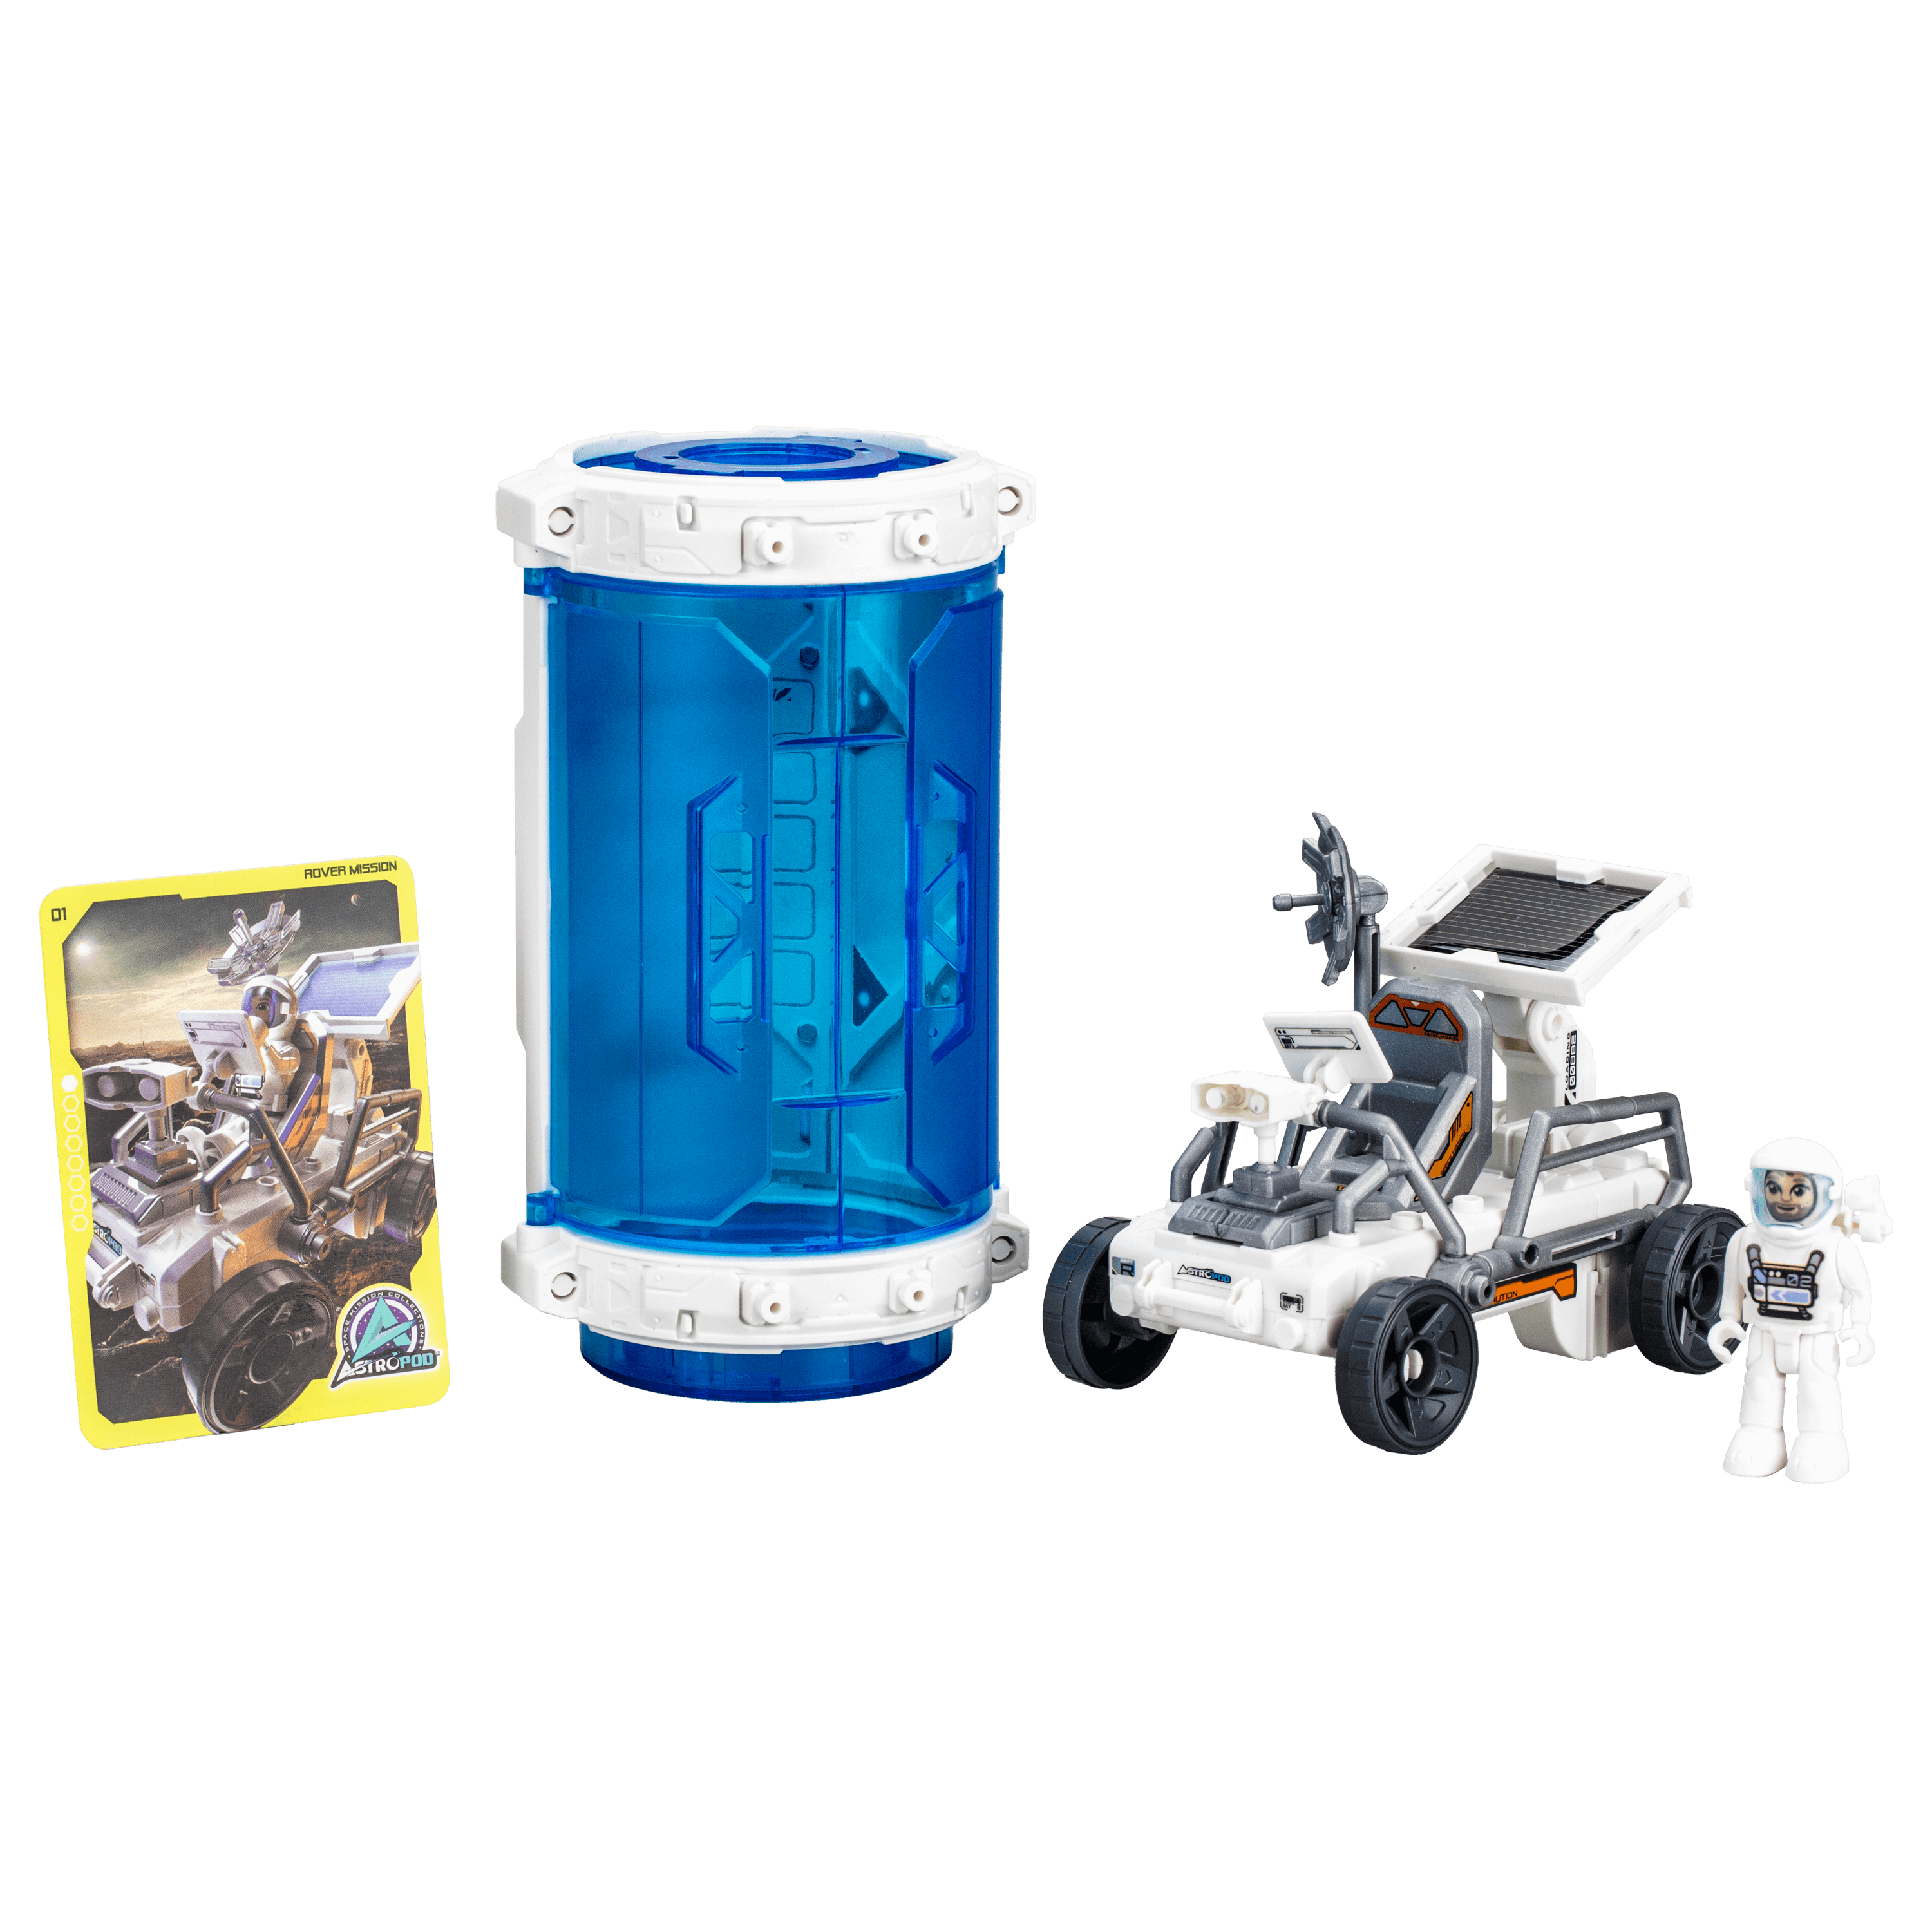 Silverlit AstroPod Rover Mission